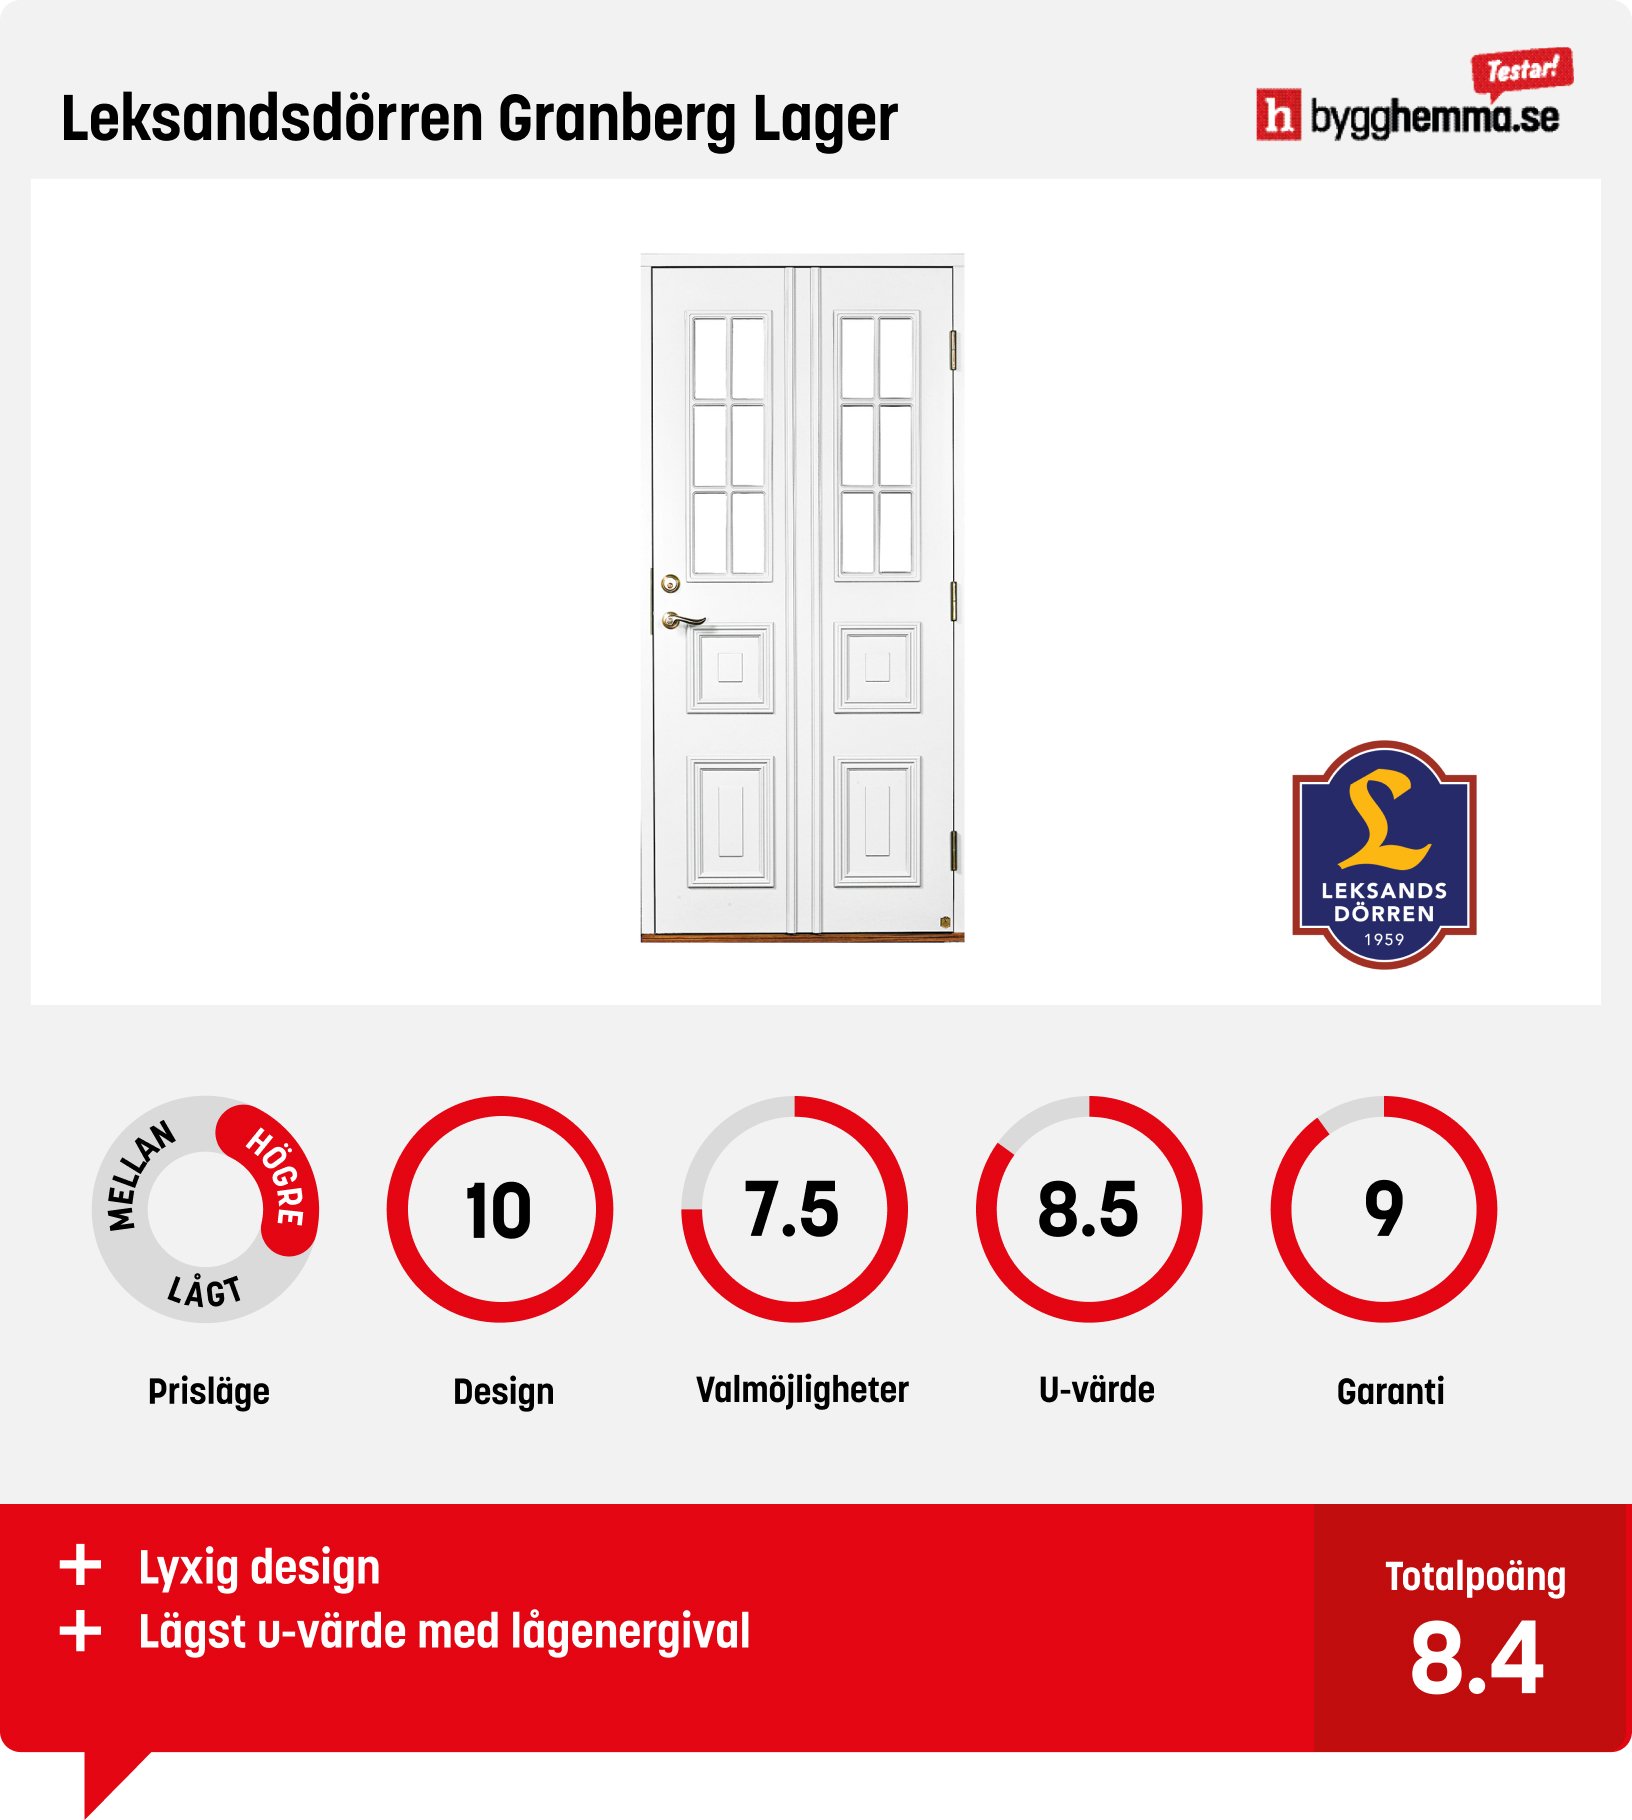 Ytterdörr bäst i test - Leksandsdörren Granberg Lager